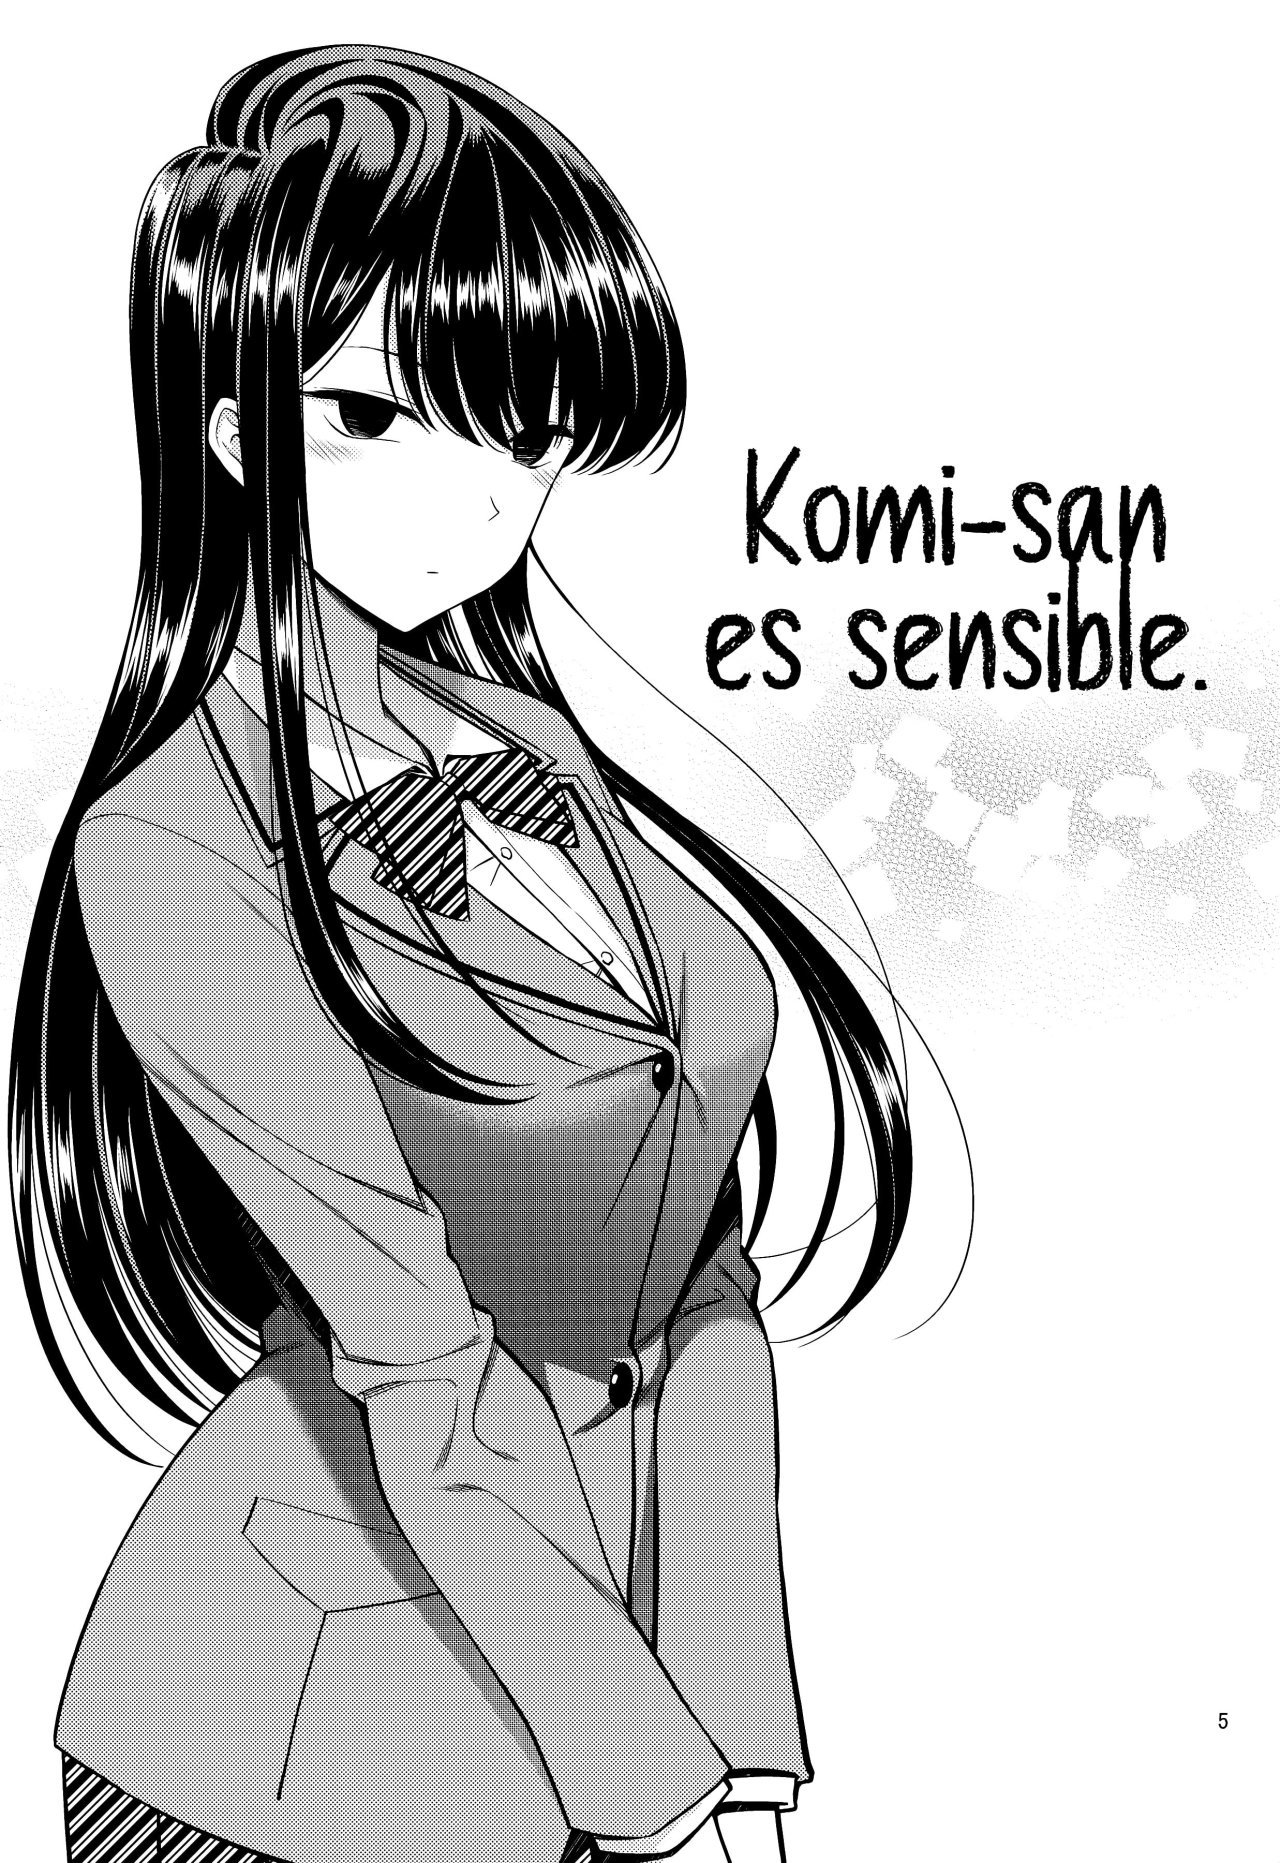 Komi-san Is Sensitive - 4